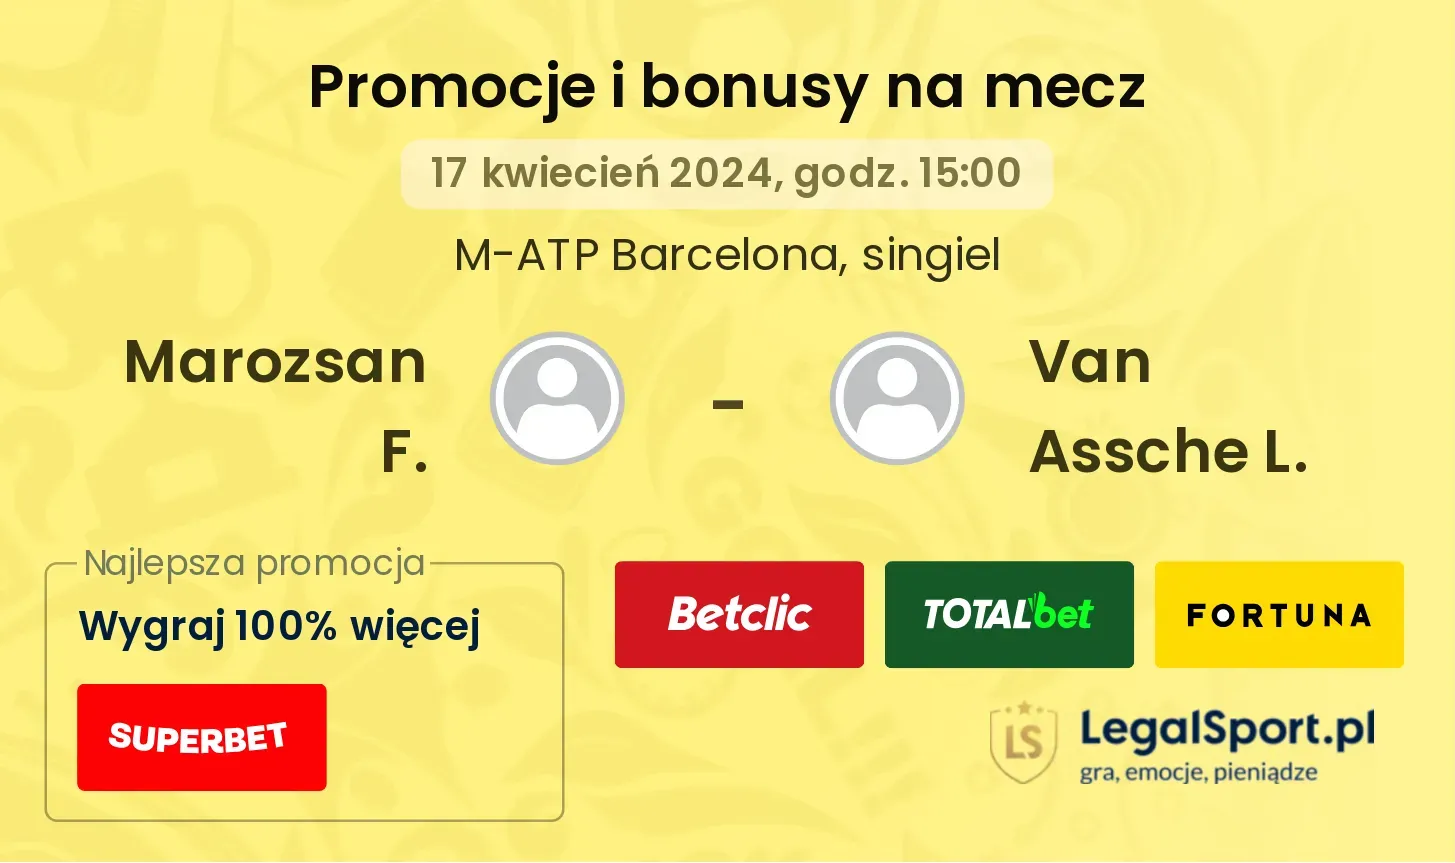 Marozsan F. - Van Assche L. promocje bonusy na mecz